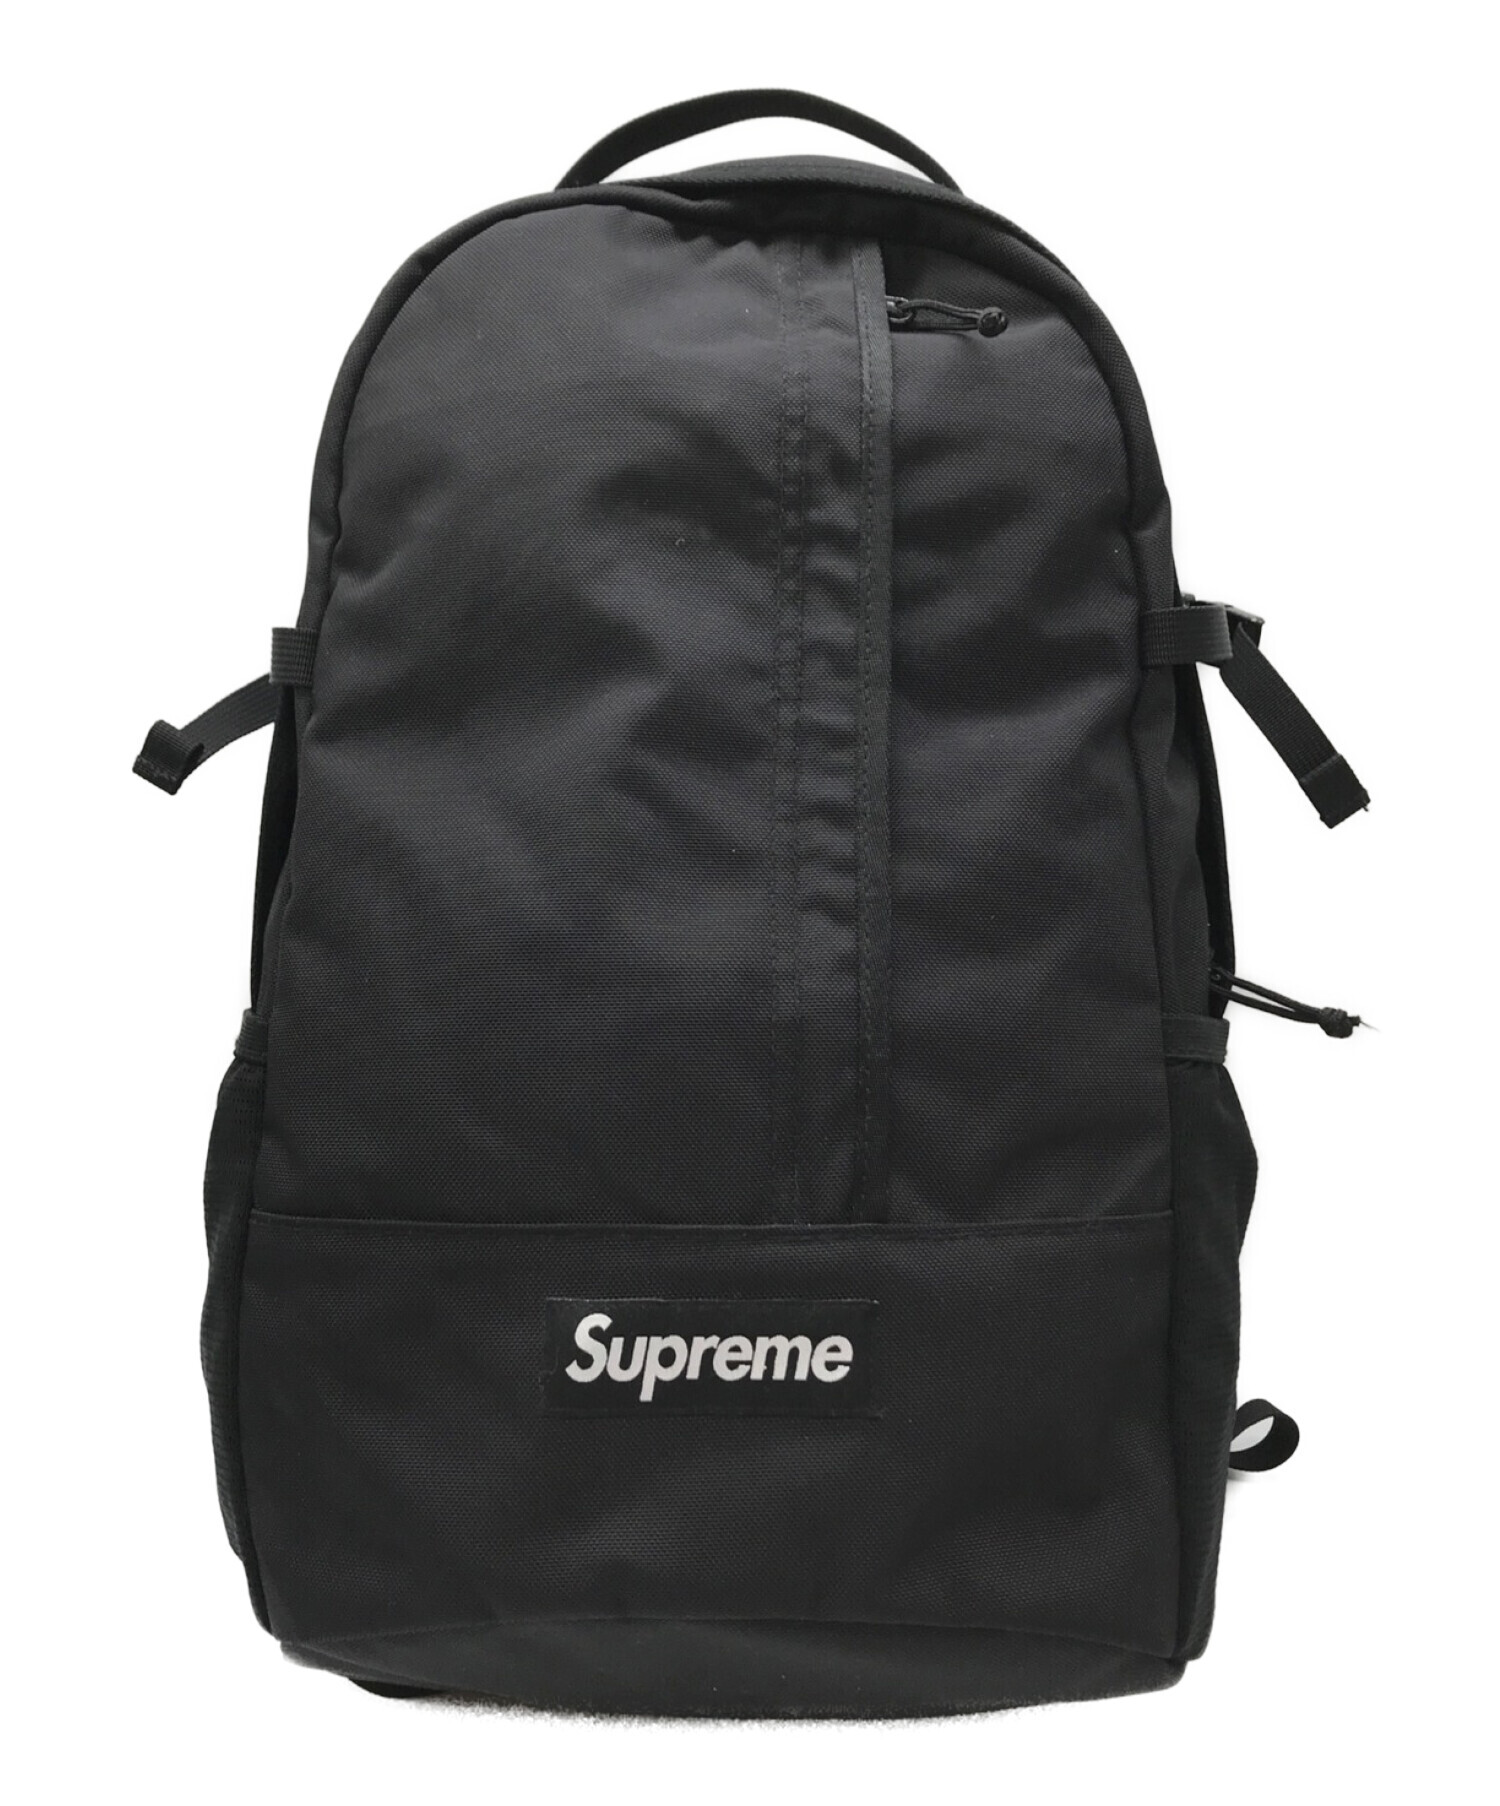 Supreme 18SS Backpack ブラック 国内正規品 新品未使用